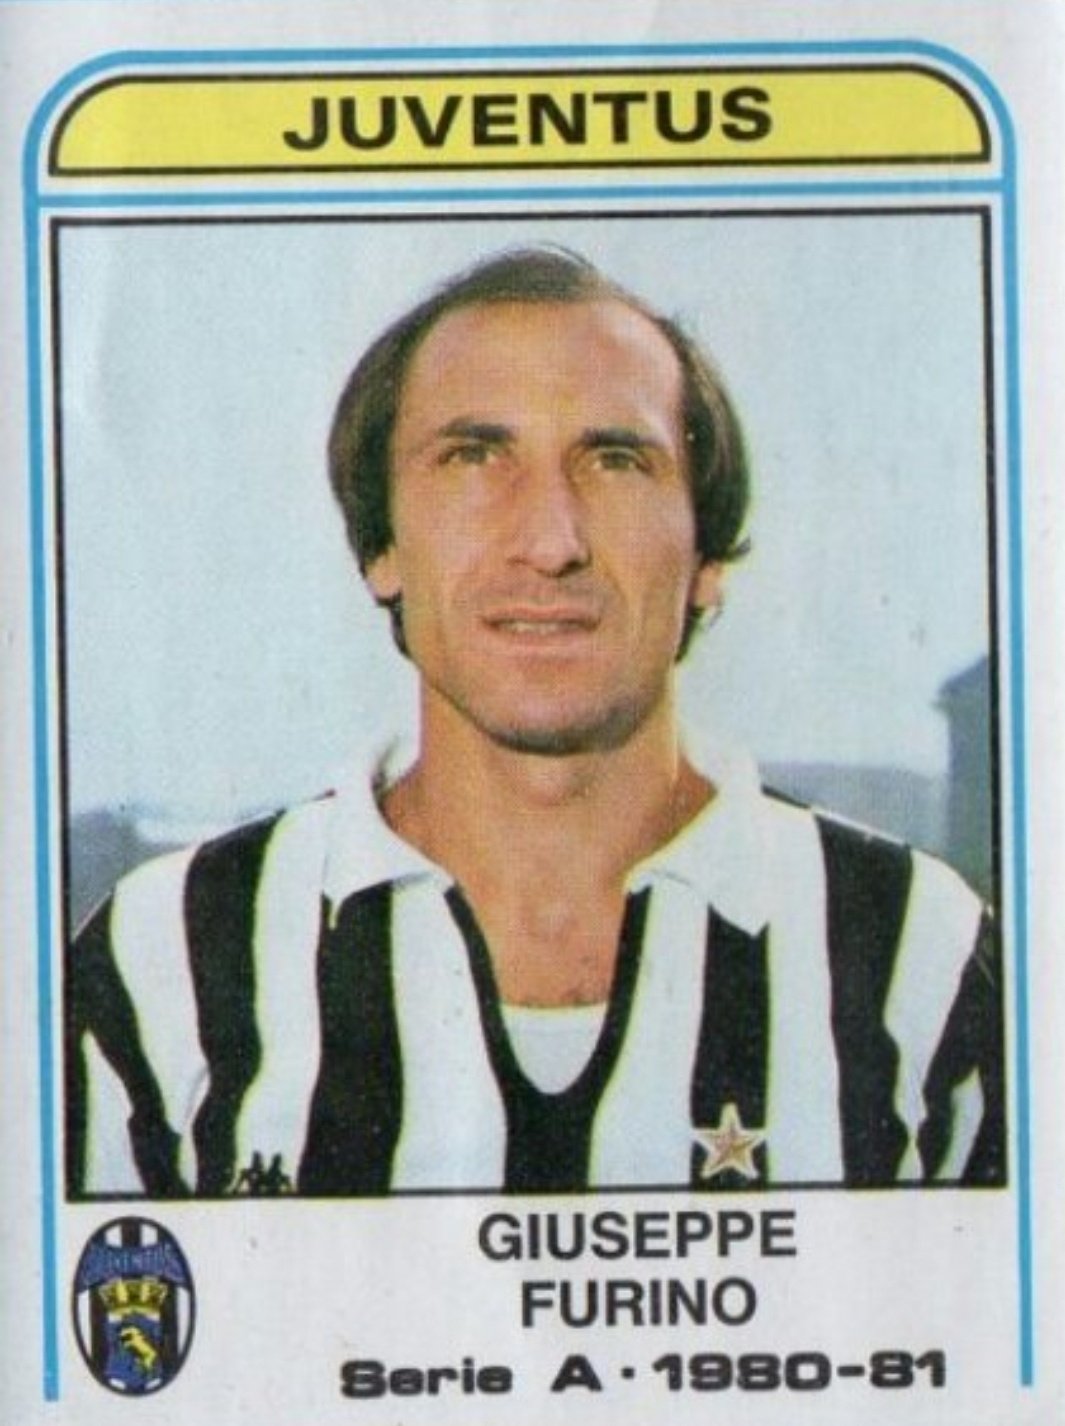 O Xrhsths 80s Footballers Ageing Badly Sto Twitter Giuseppe Furino Juventus Age At Time Of Photo 34 Thanks To Simodoh Juventus Juve Https T Co Ascud0azfj Twitter